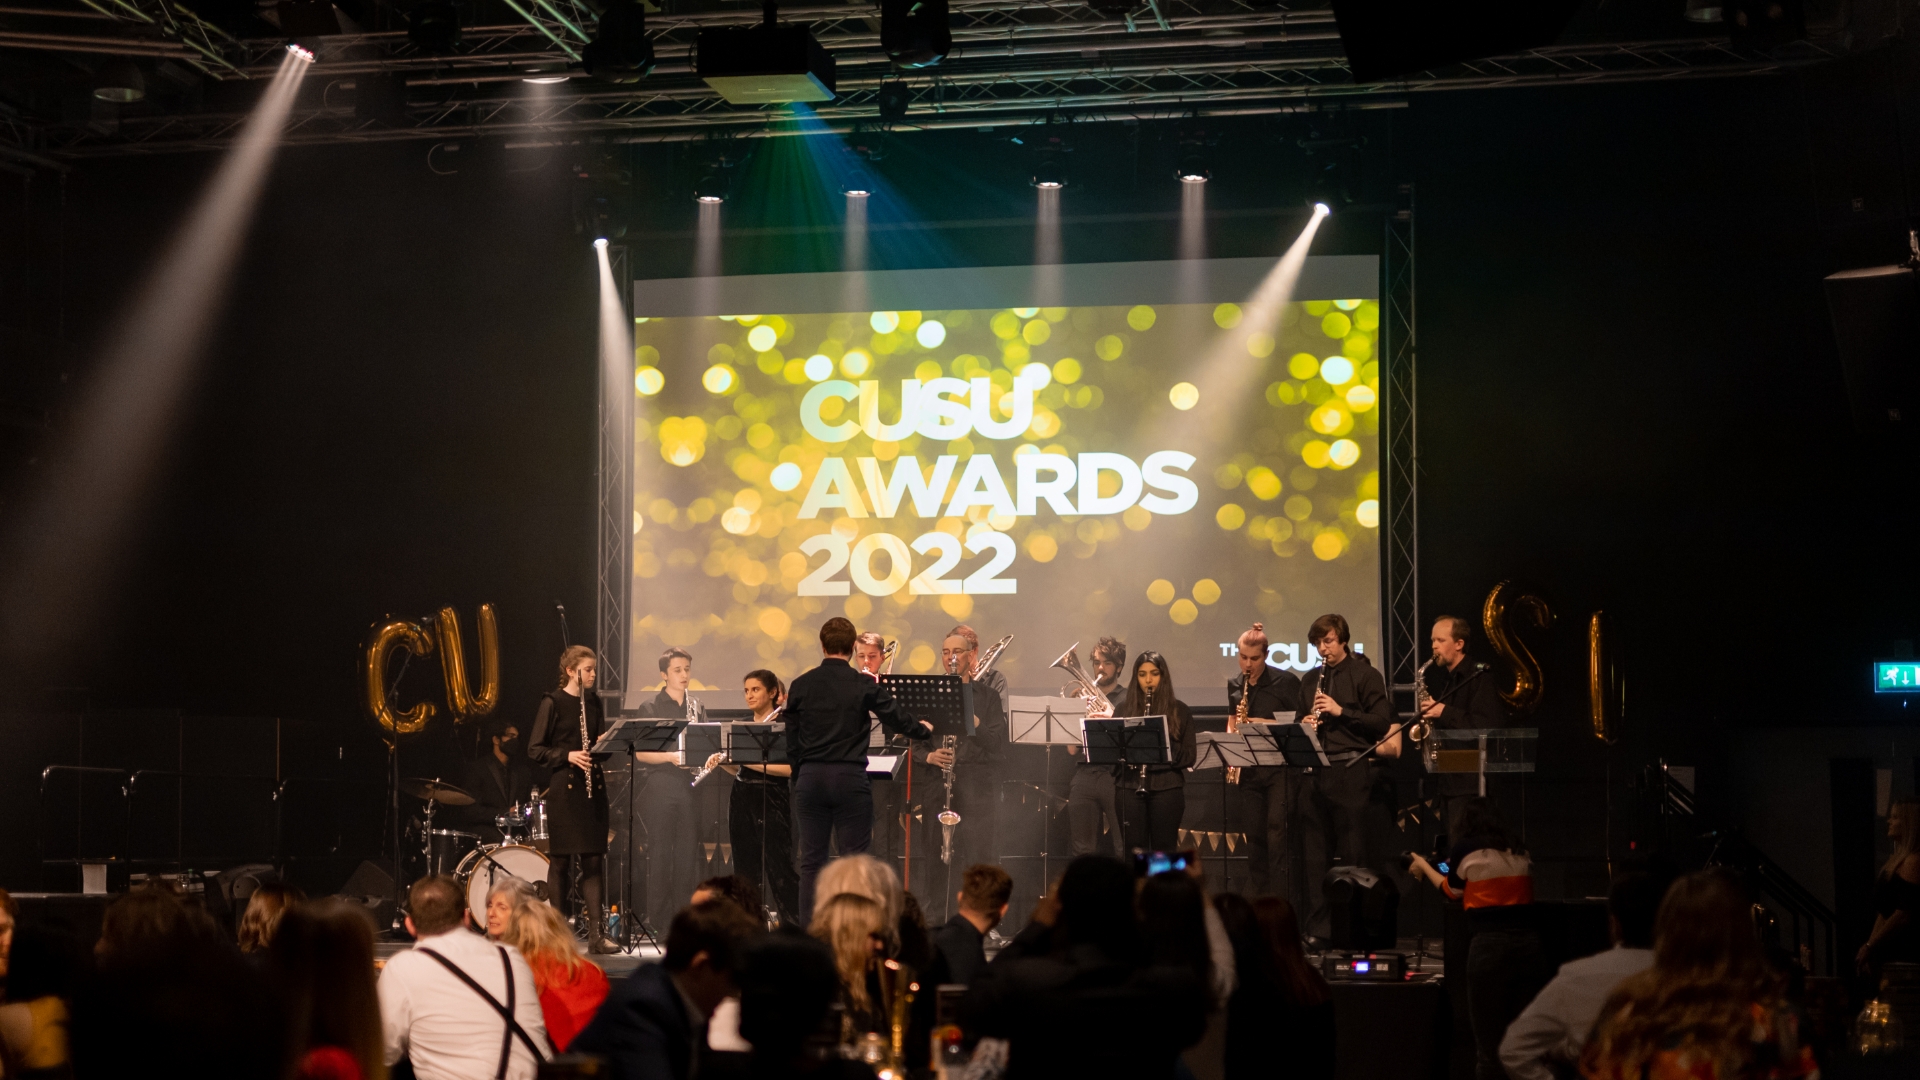 CUSU awards ceremony